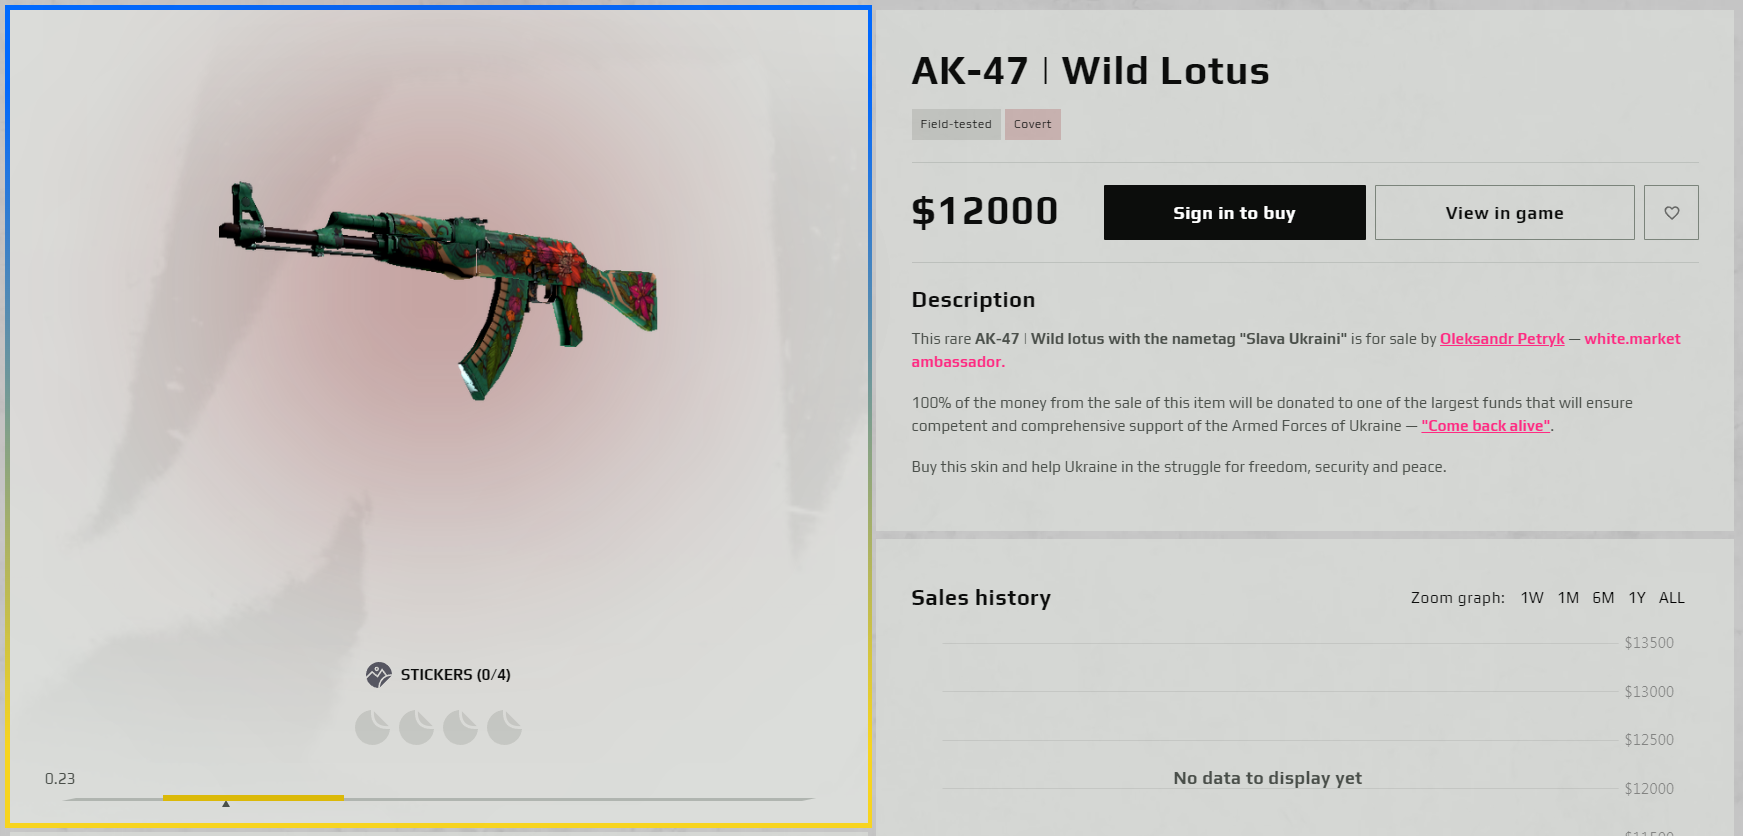 AK-47 | Wild Lotus (закаленное в боях), 140651,64. AK Wild Lotus. Скрин продажи АК 47 наследство в стиме.